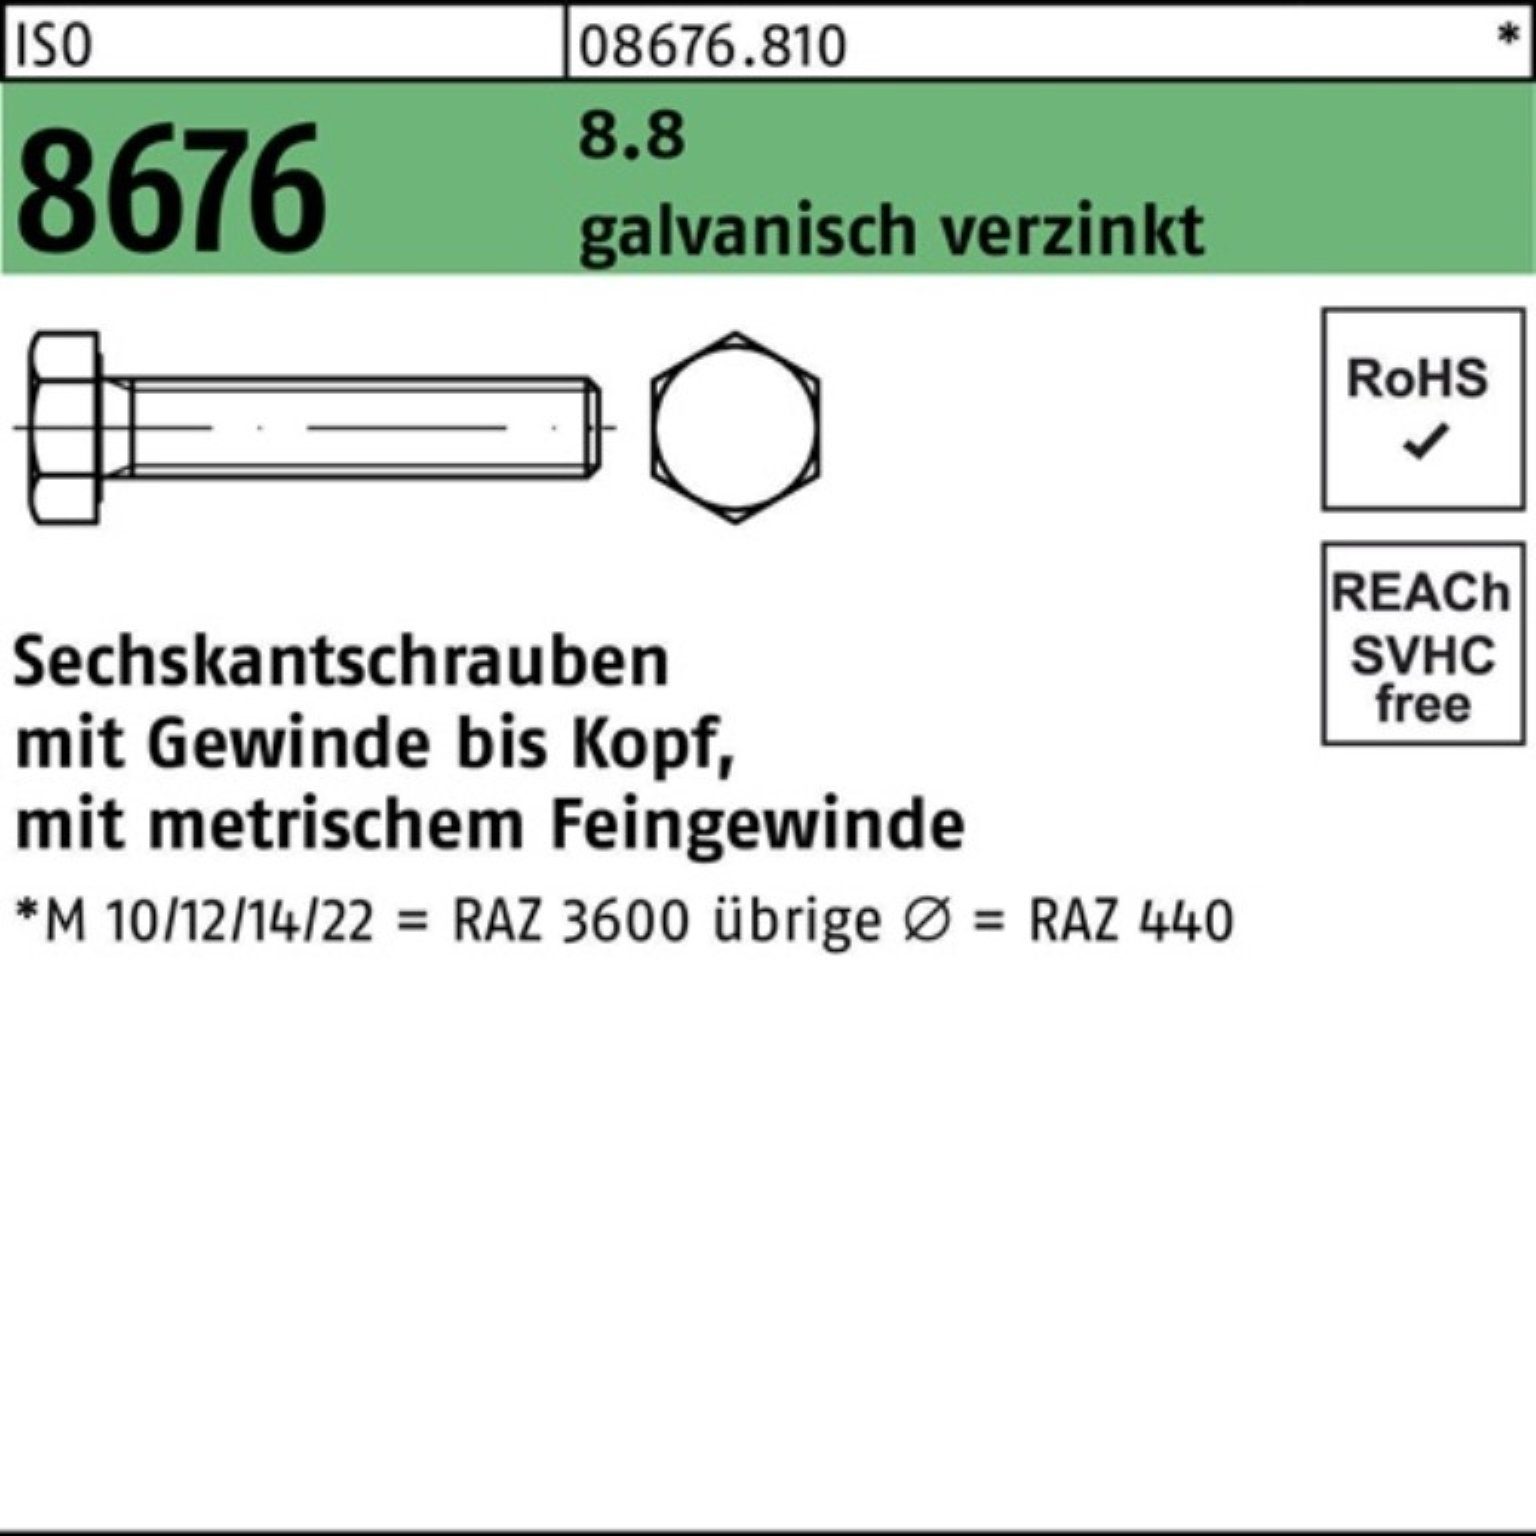 Reyher Sechskantschraube 100er Pack Sechskantschraube M12x1,5x 8.8 galv.verz. 8676 ISO 10 VG 50